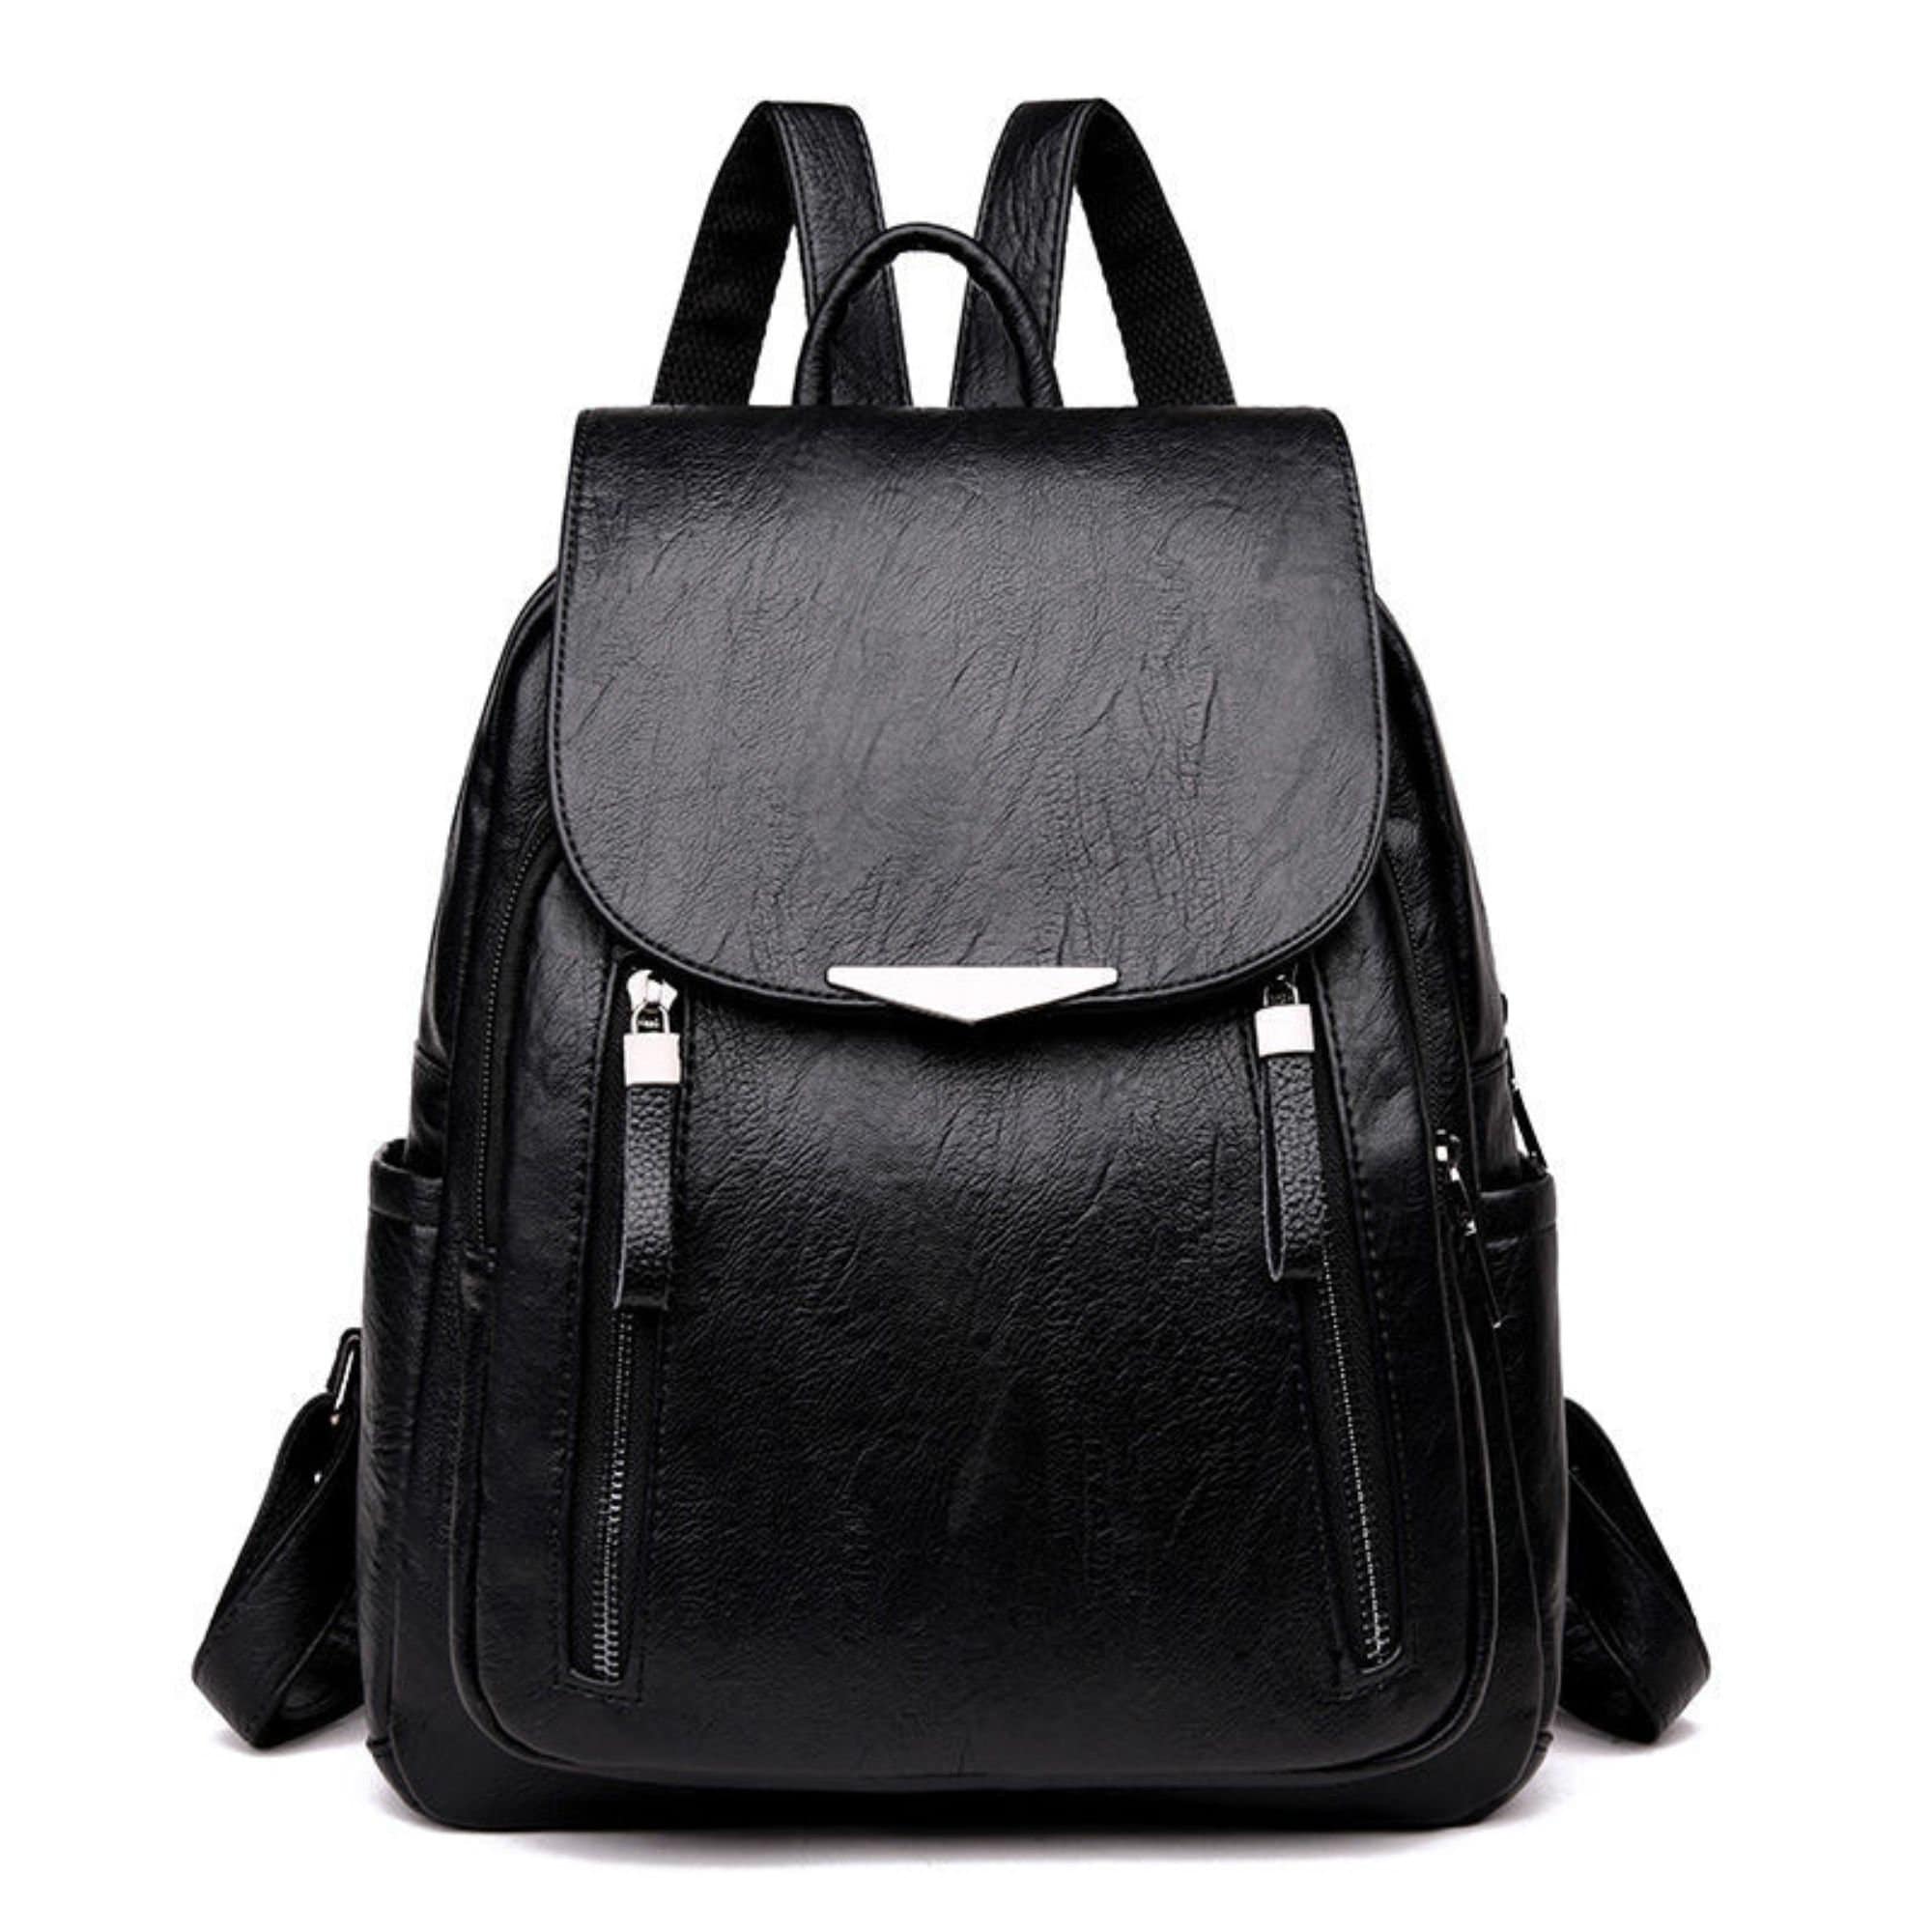 Classy Backpack for Women Vegan Leather Handbag with | Etsy